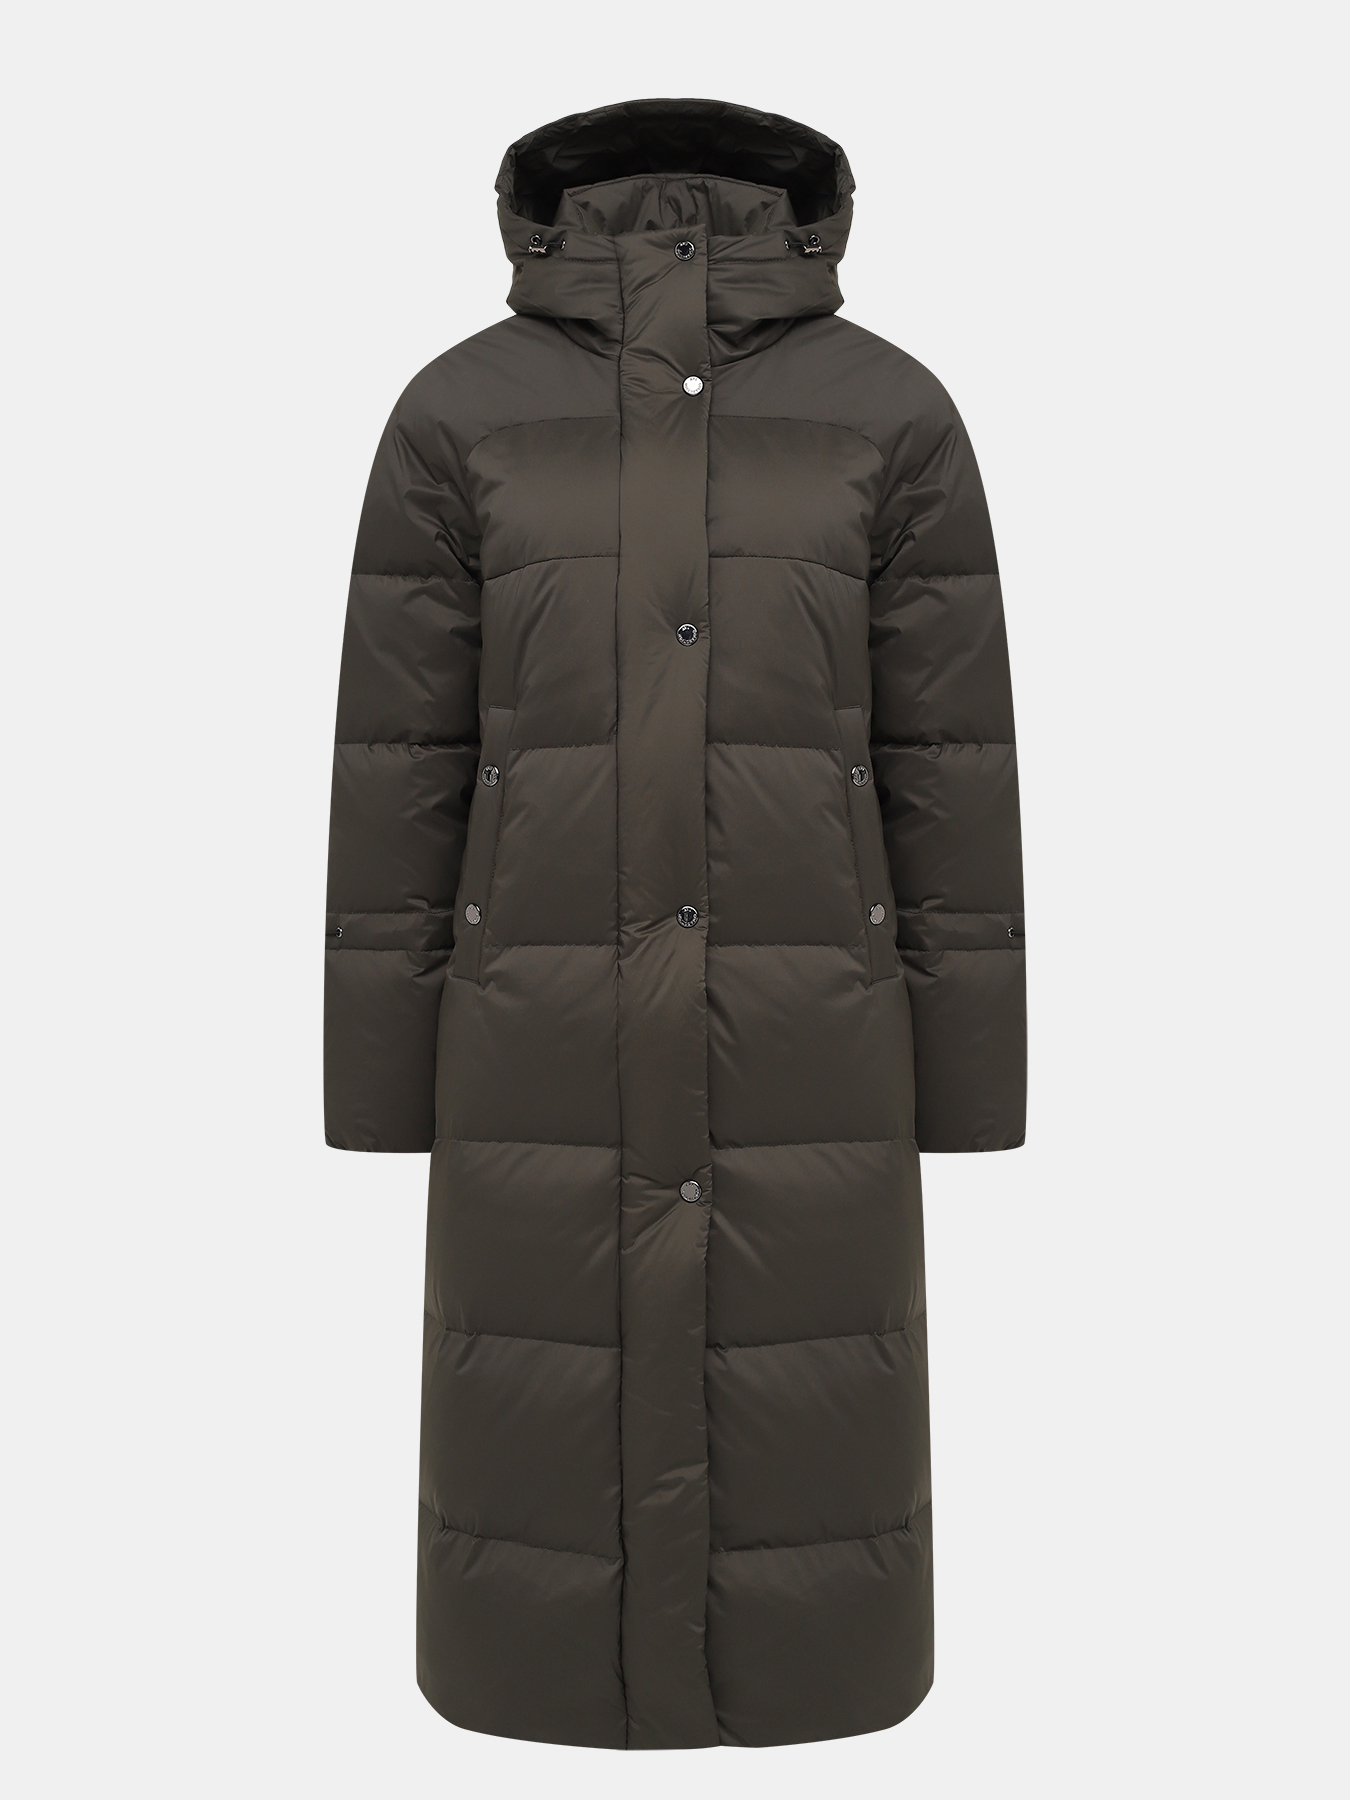 Пальто зимнее AVI 433638-021, цвет хаки, размер 46 - фото 1